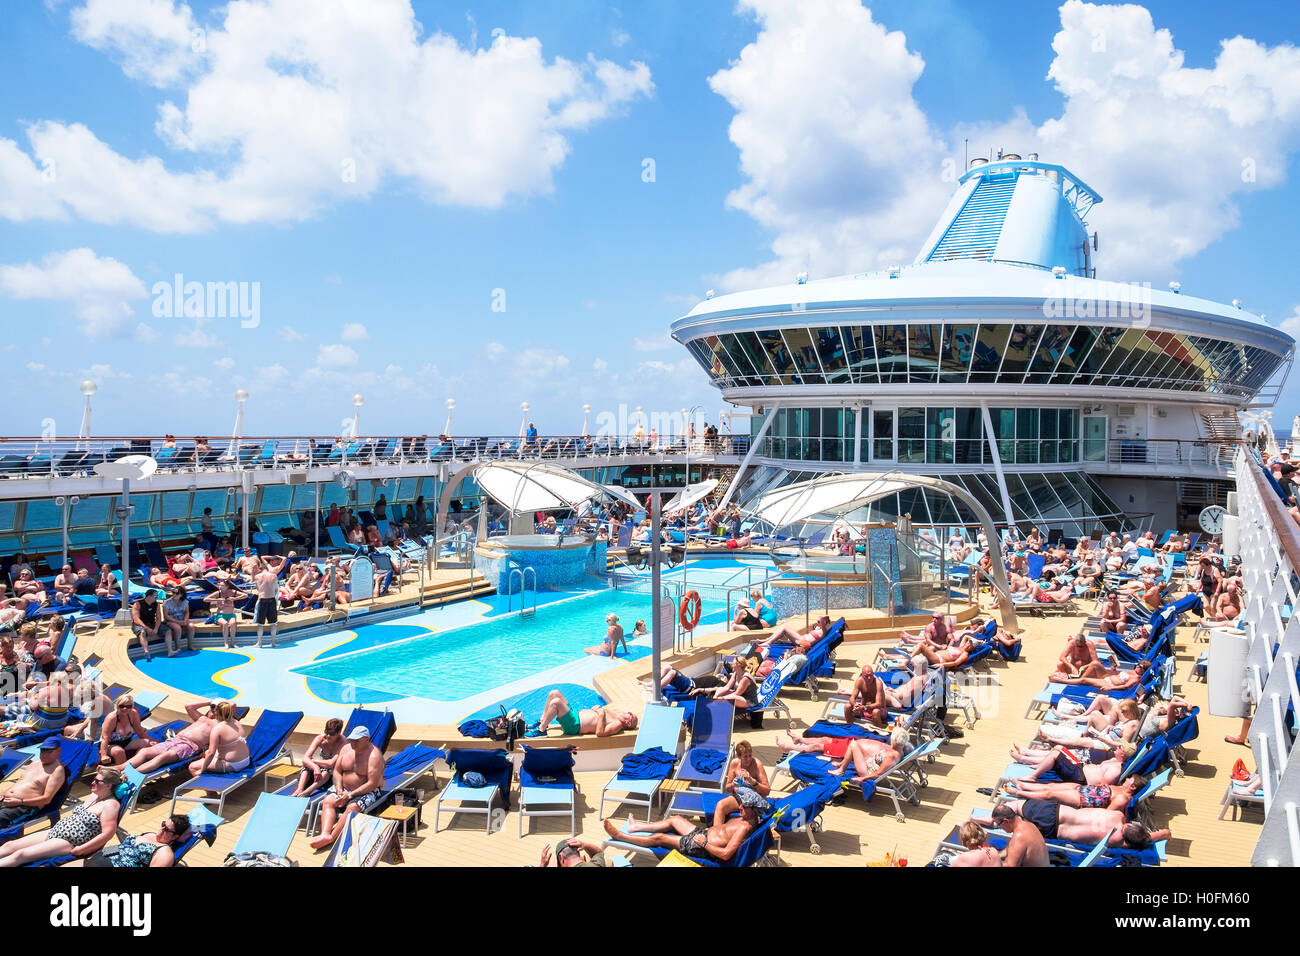 Passengers enjoying the mediterranean sun on the pool deck of a Thomson cruise ship. Stock Photo